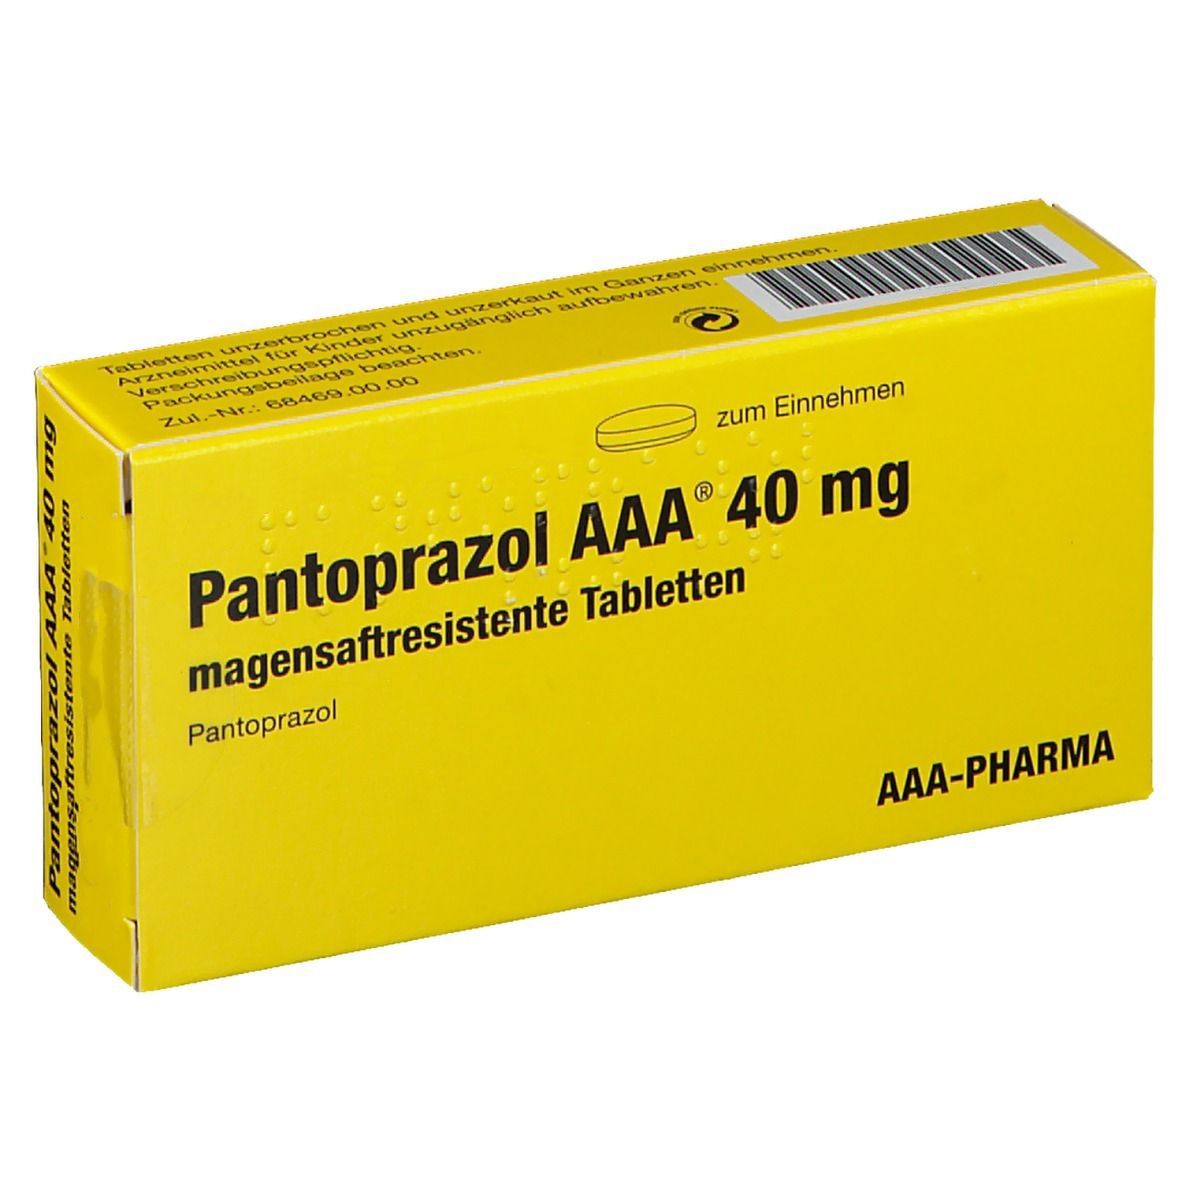 Pantoprazol AAA® 40 mg